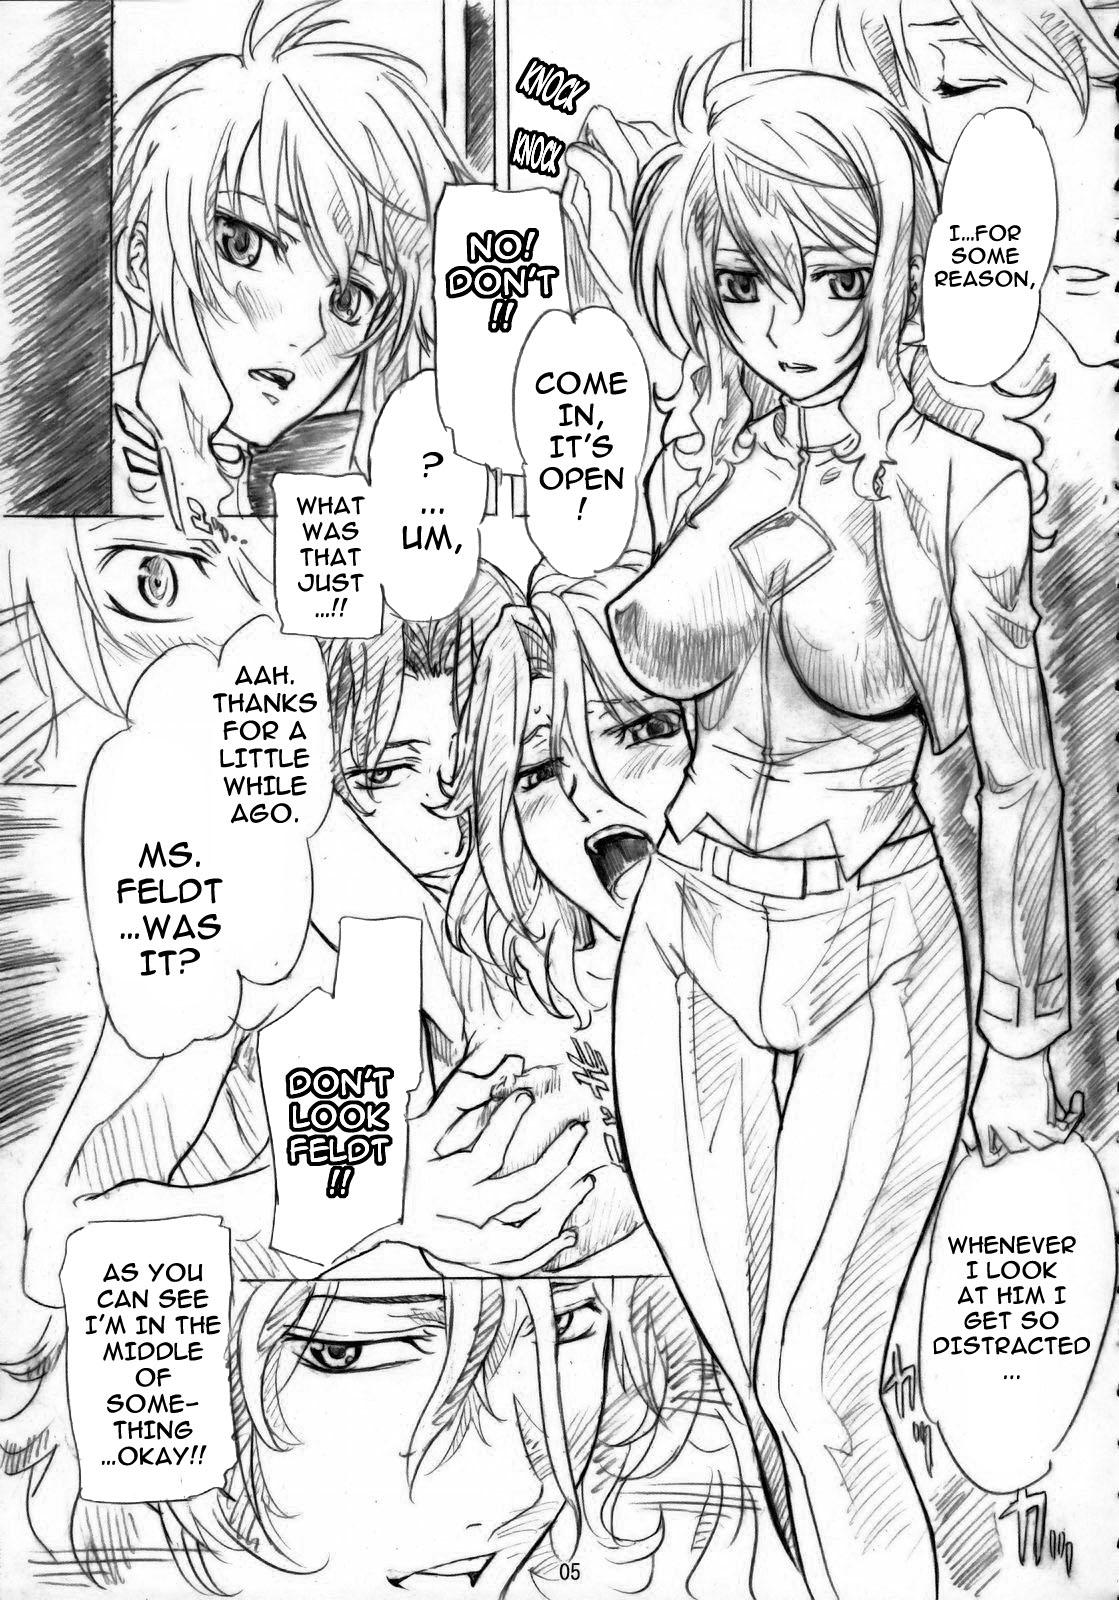 Village TRANS-AM00 - Gundam 00 Seduction Porn - Page 4